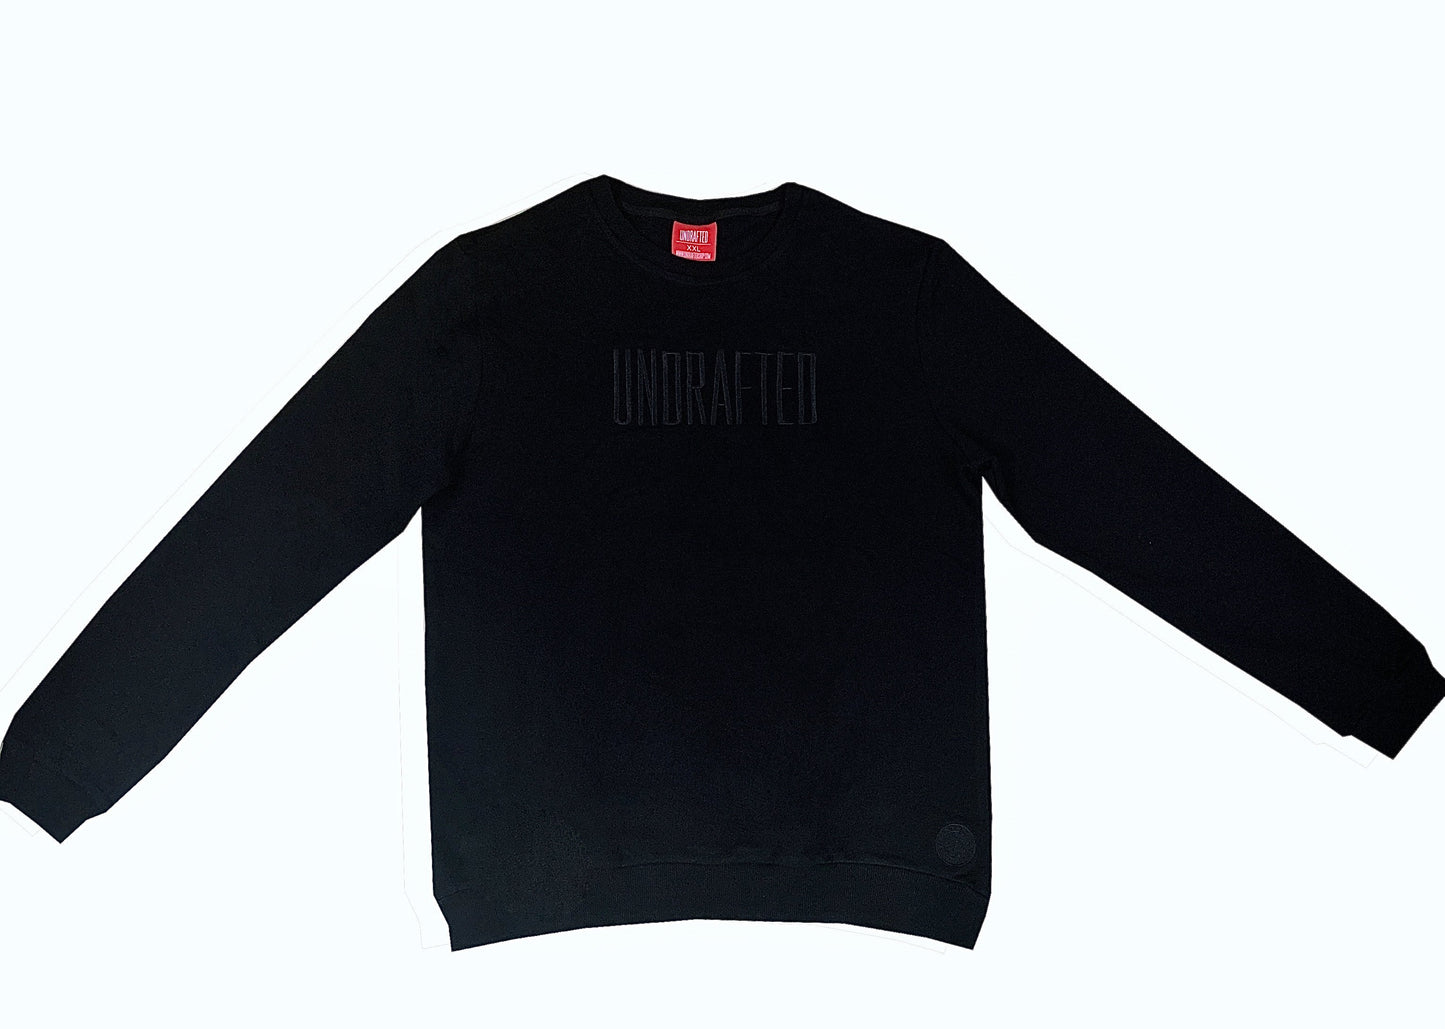 (Copy) Embroidered Undrafted Sweatshirt Black/Black